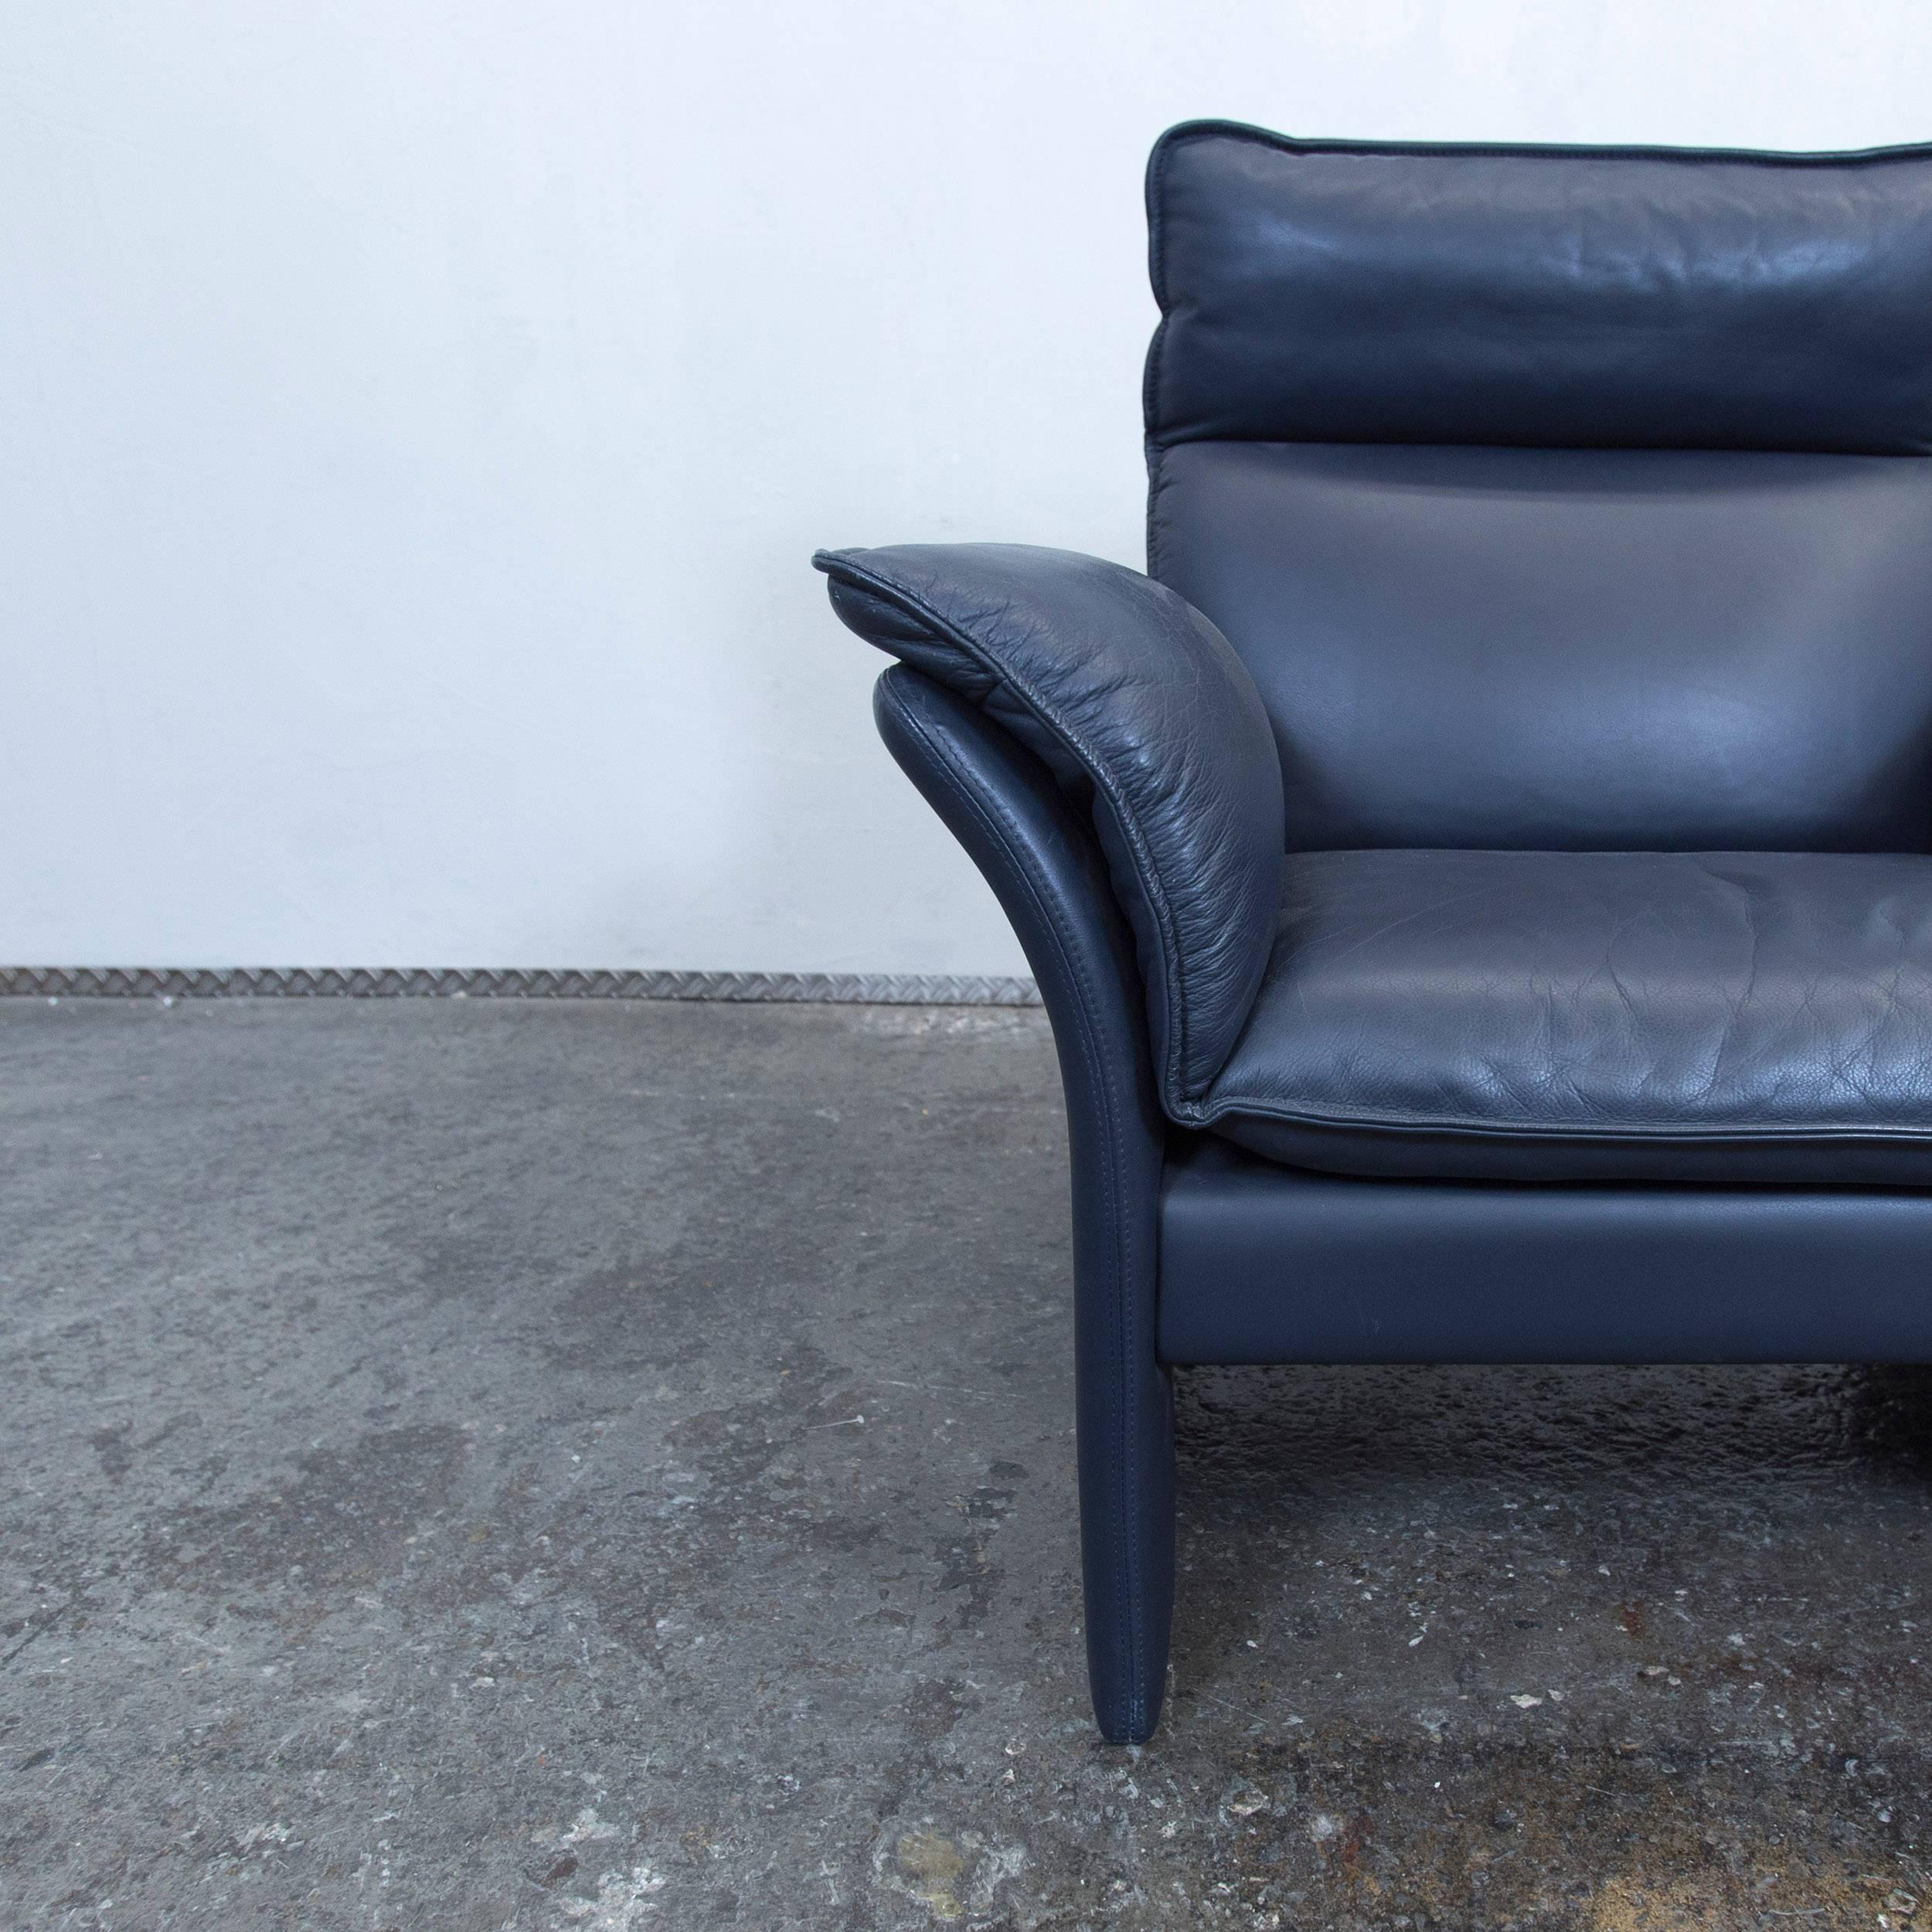 Blue colored original Dreipunkt designer leather armchair in a modern design, made for pure comfort.